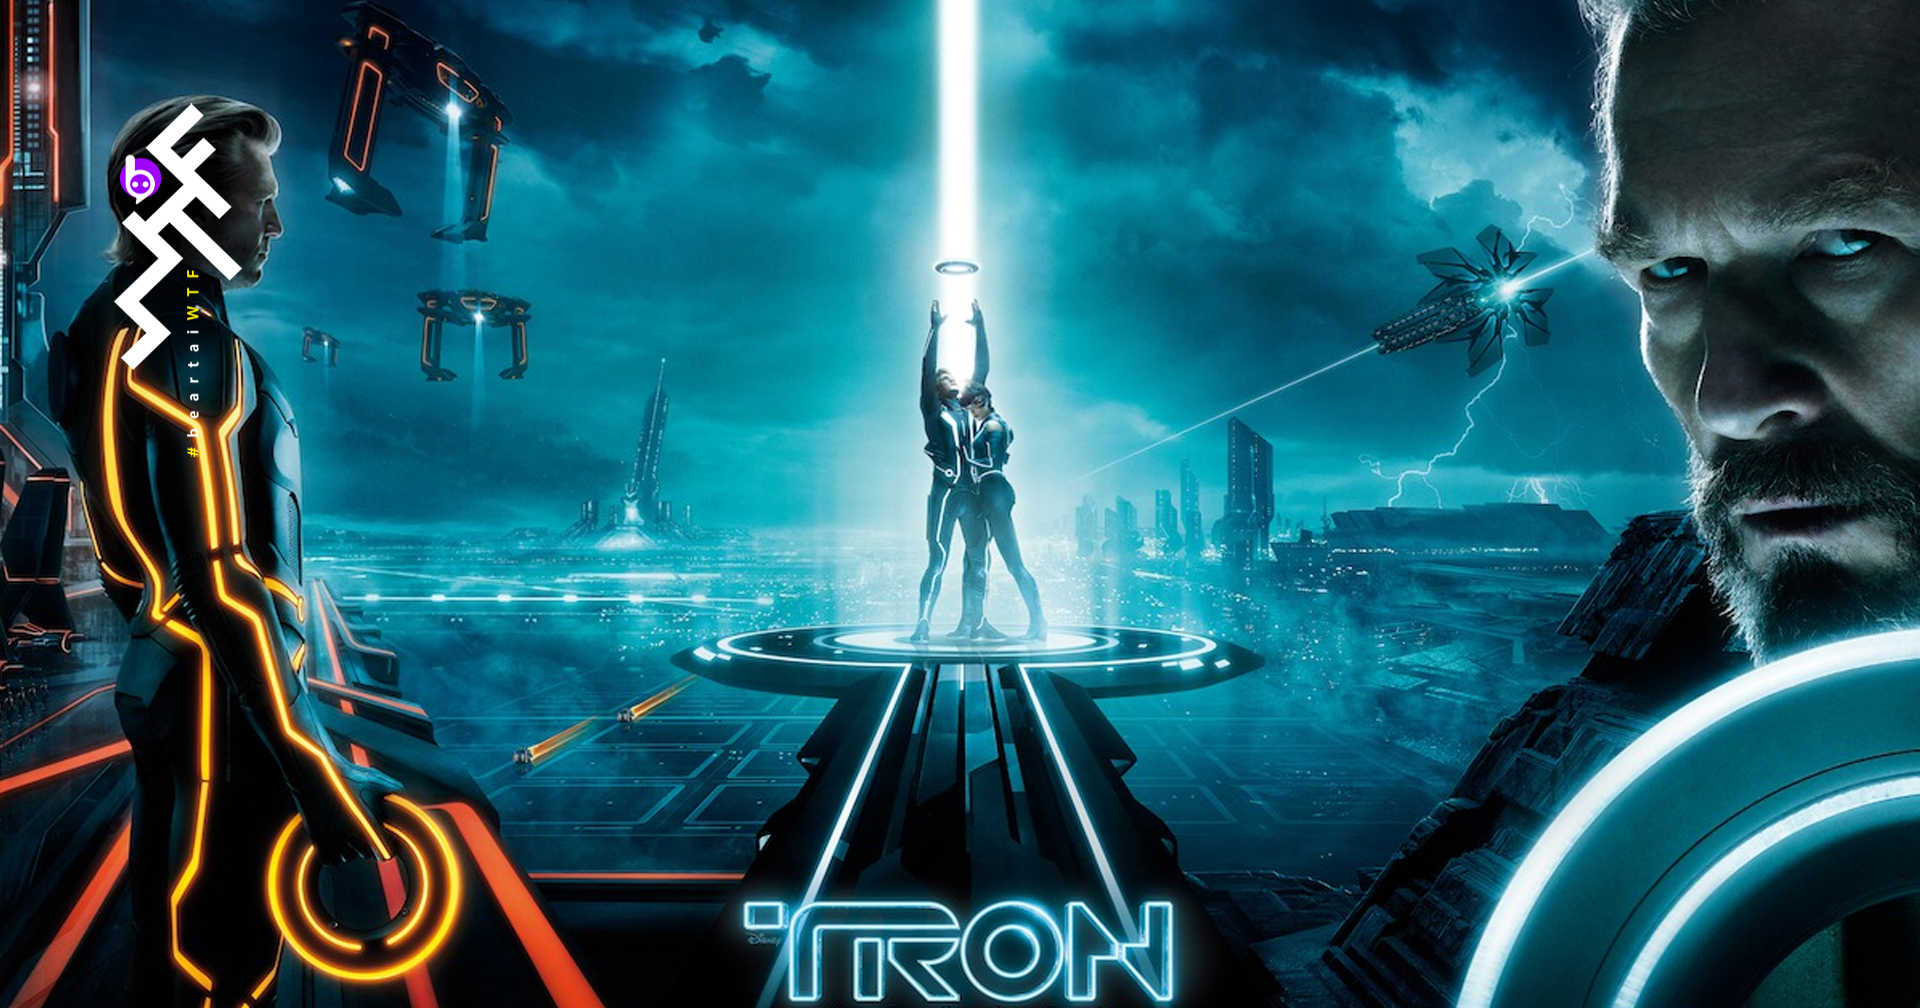 Tron ภาค 3 ได้ Jared Leto รับบทนำ และผู้กำกับจากหนังดราม่า Lion